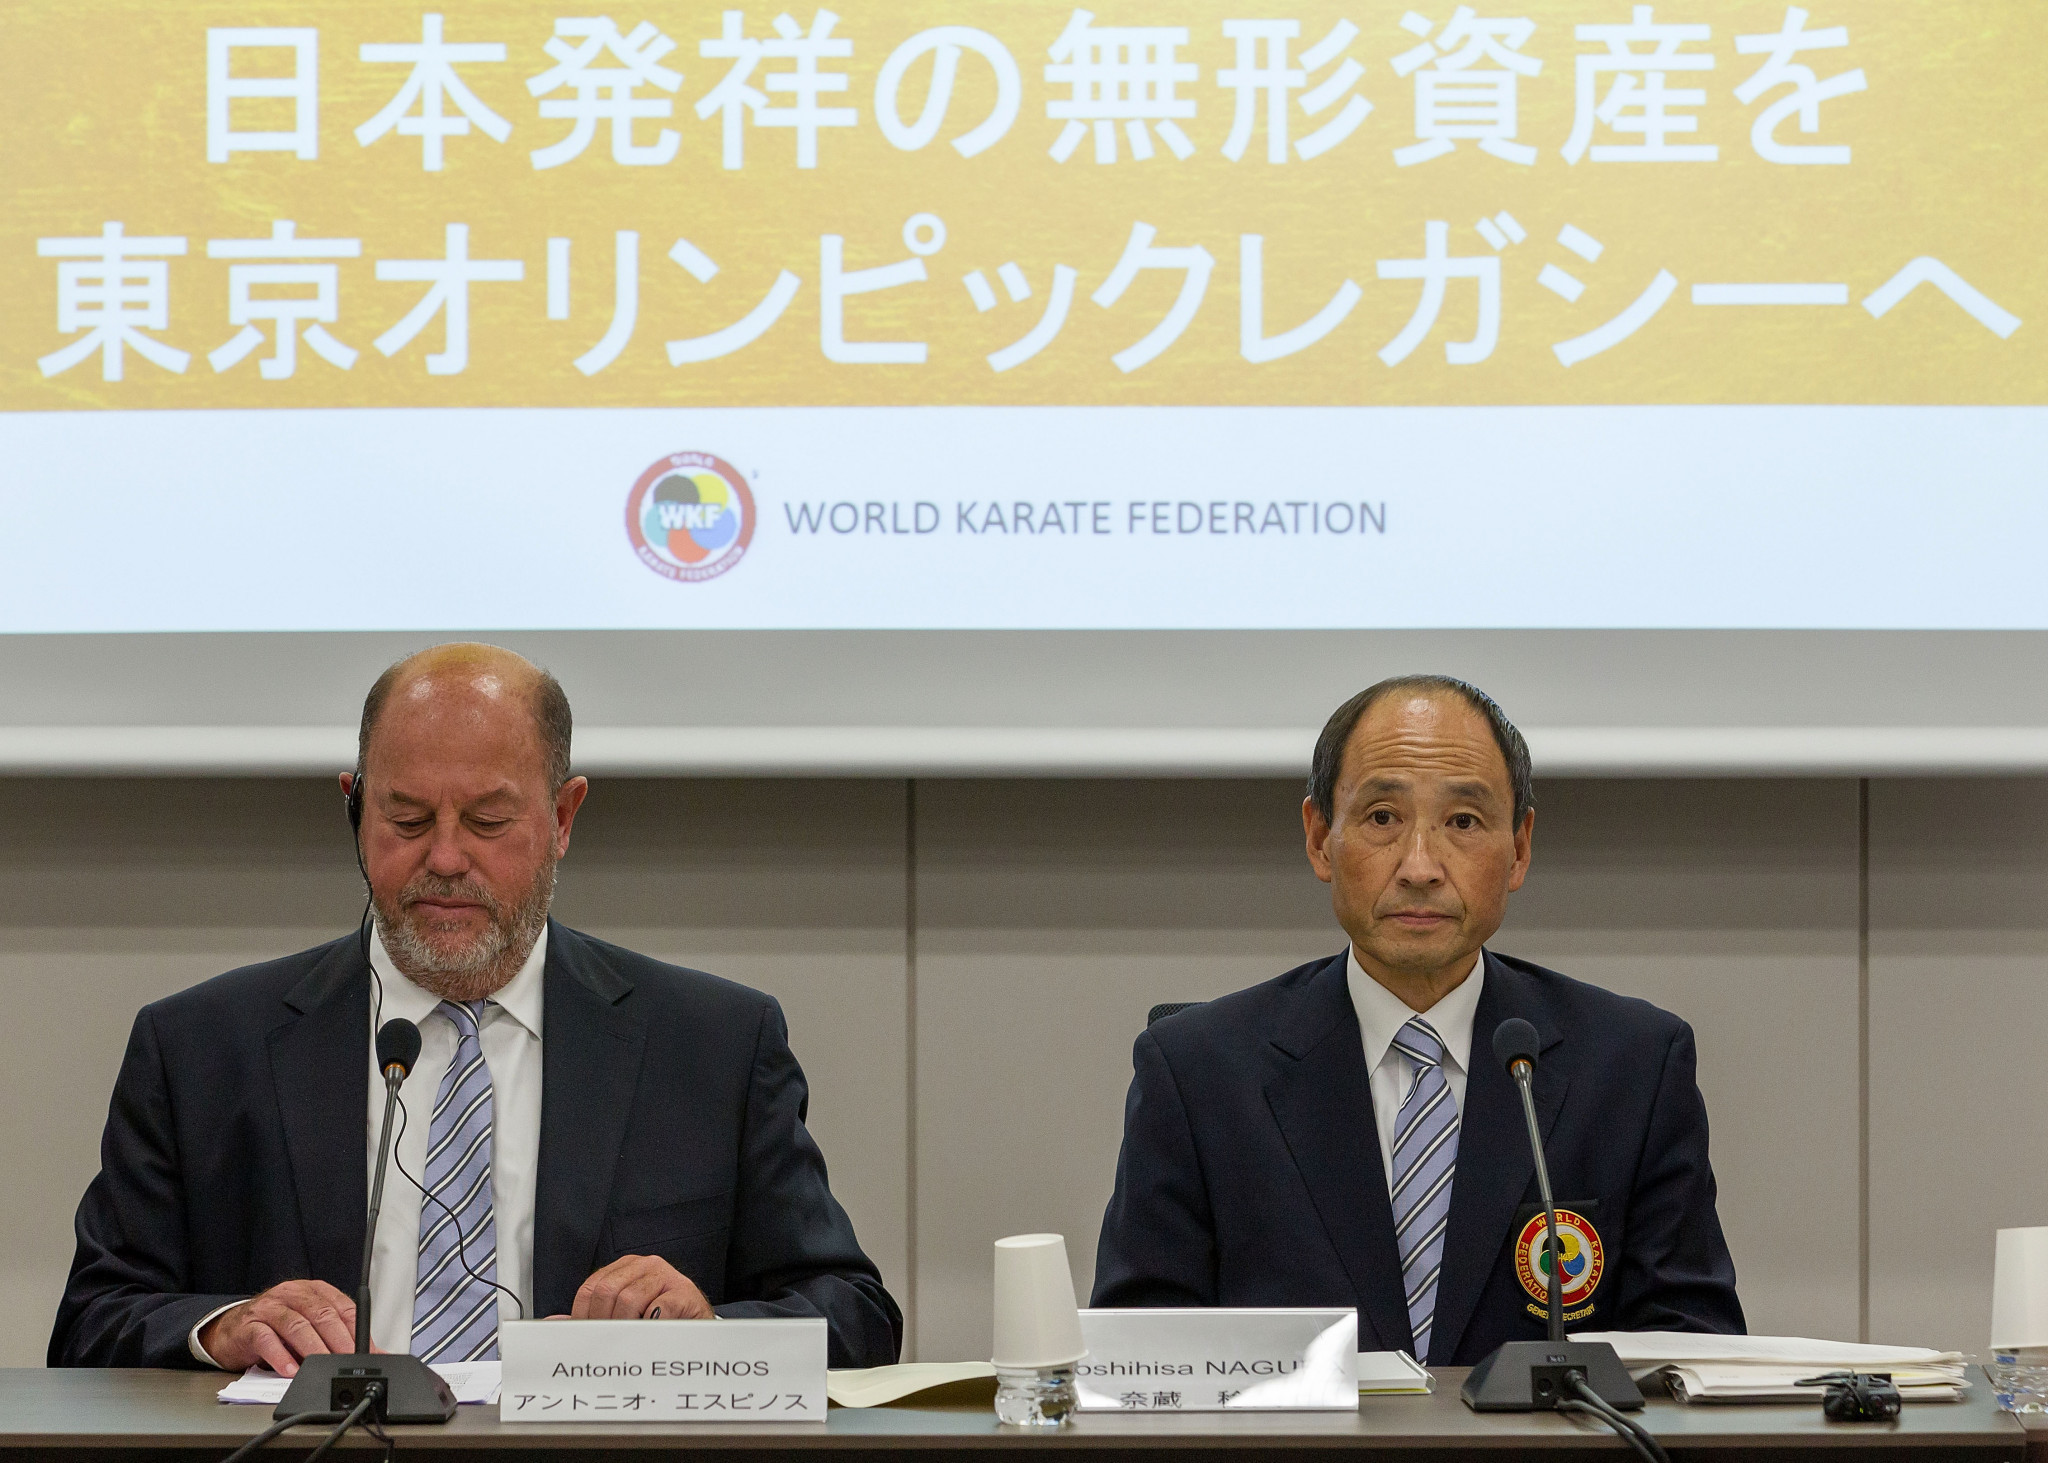 World Karate Federation President Antonio Espinós, left, said at the Asian Karate Federation's Congress that Tokyo 2020 